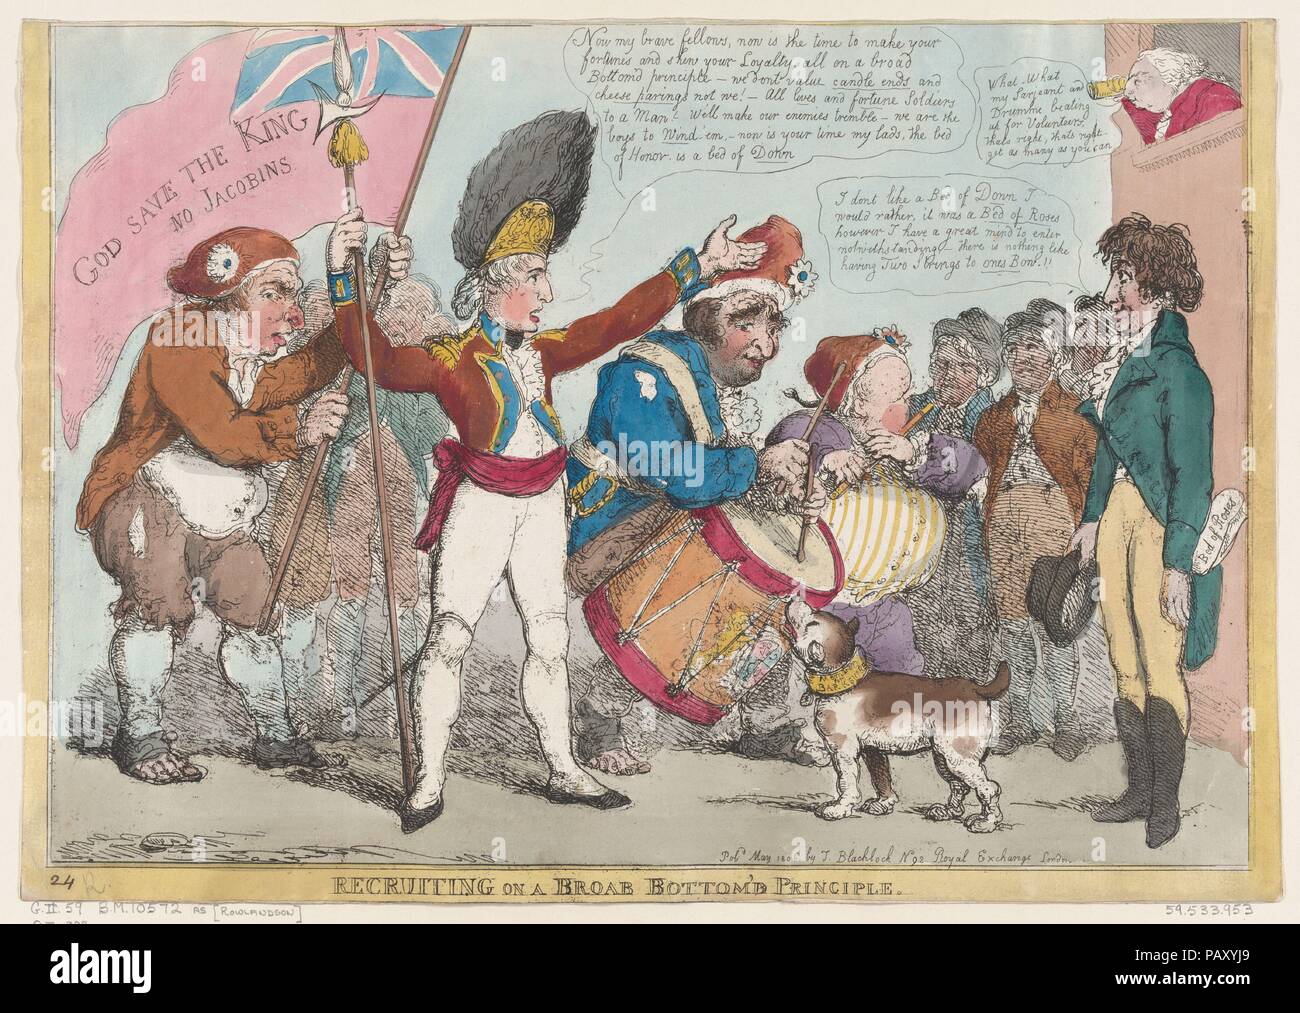 Recruiting on a Broab [sic] Bottom'd Principle. Artist and publisher: Thomas Rowlandson (British, London 1757-1827 London). Dimensions: Sheet: 11 7/16 × 16 3/8 in. (29 × 41.6 cm). Publisher: T. Blacklock (British, active London, ca. 1806). Subject: Charles James Fox (British, 1749-1806); George III, King of Great Britain and Ireland (British, London 1738-1820 Windsor); Richard Brinsley Sheridan (Irish, Dublin 1751-1816 London); Edward Smith Stanley, 12th Earl of Derby. Date: May 1806. Museum: Metropolitan Museum of Art, New York, USA. Stock Photo